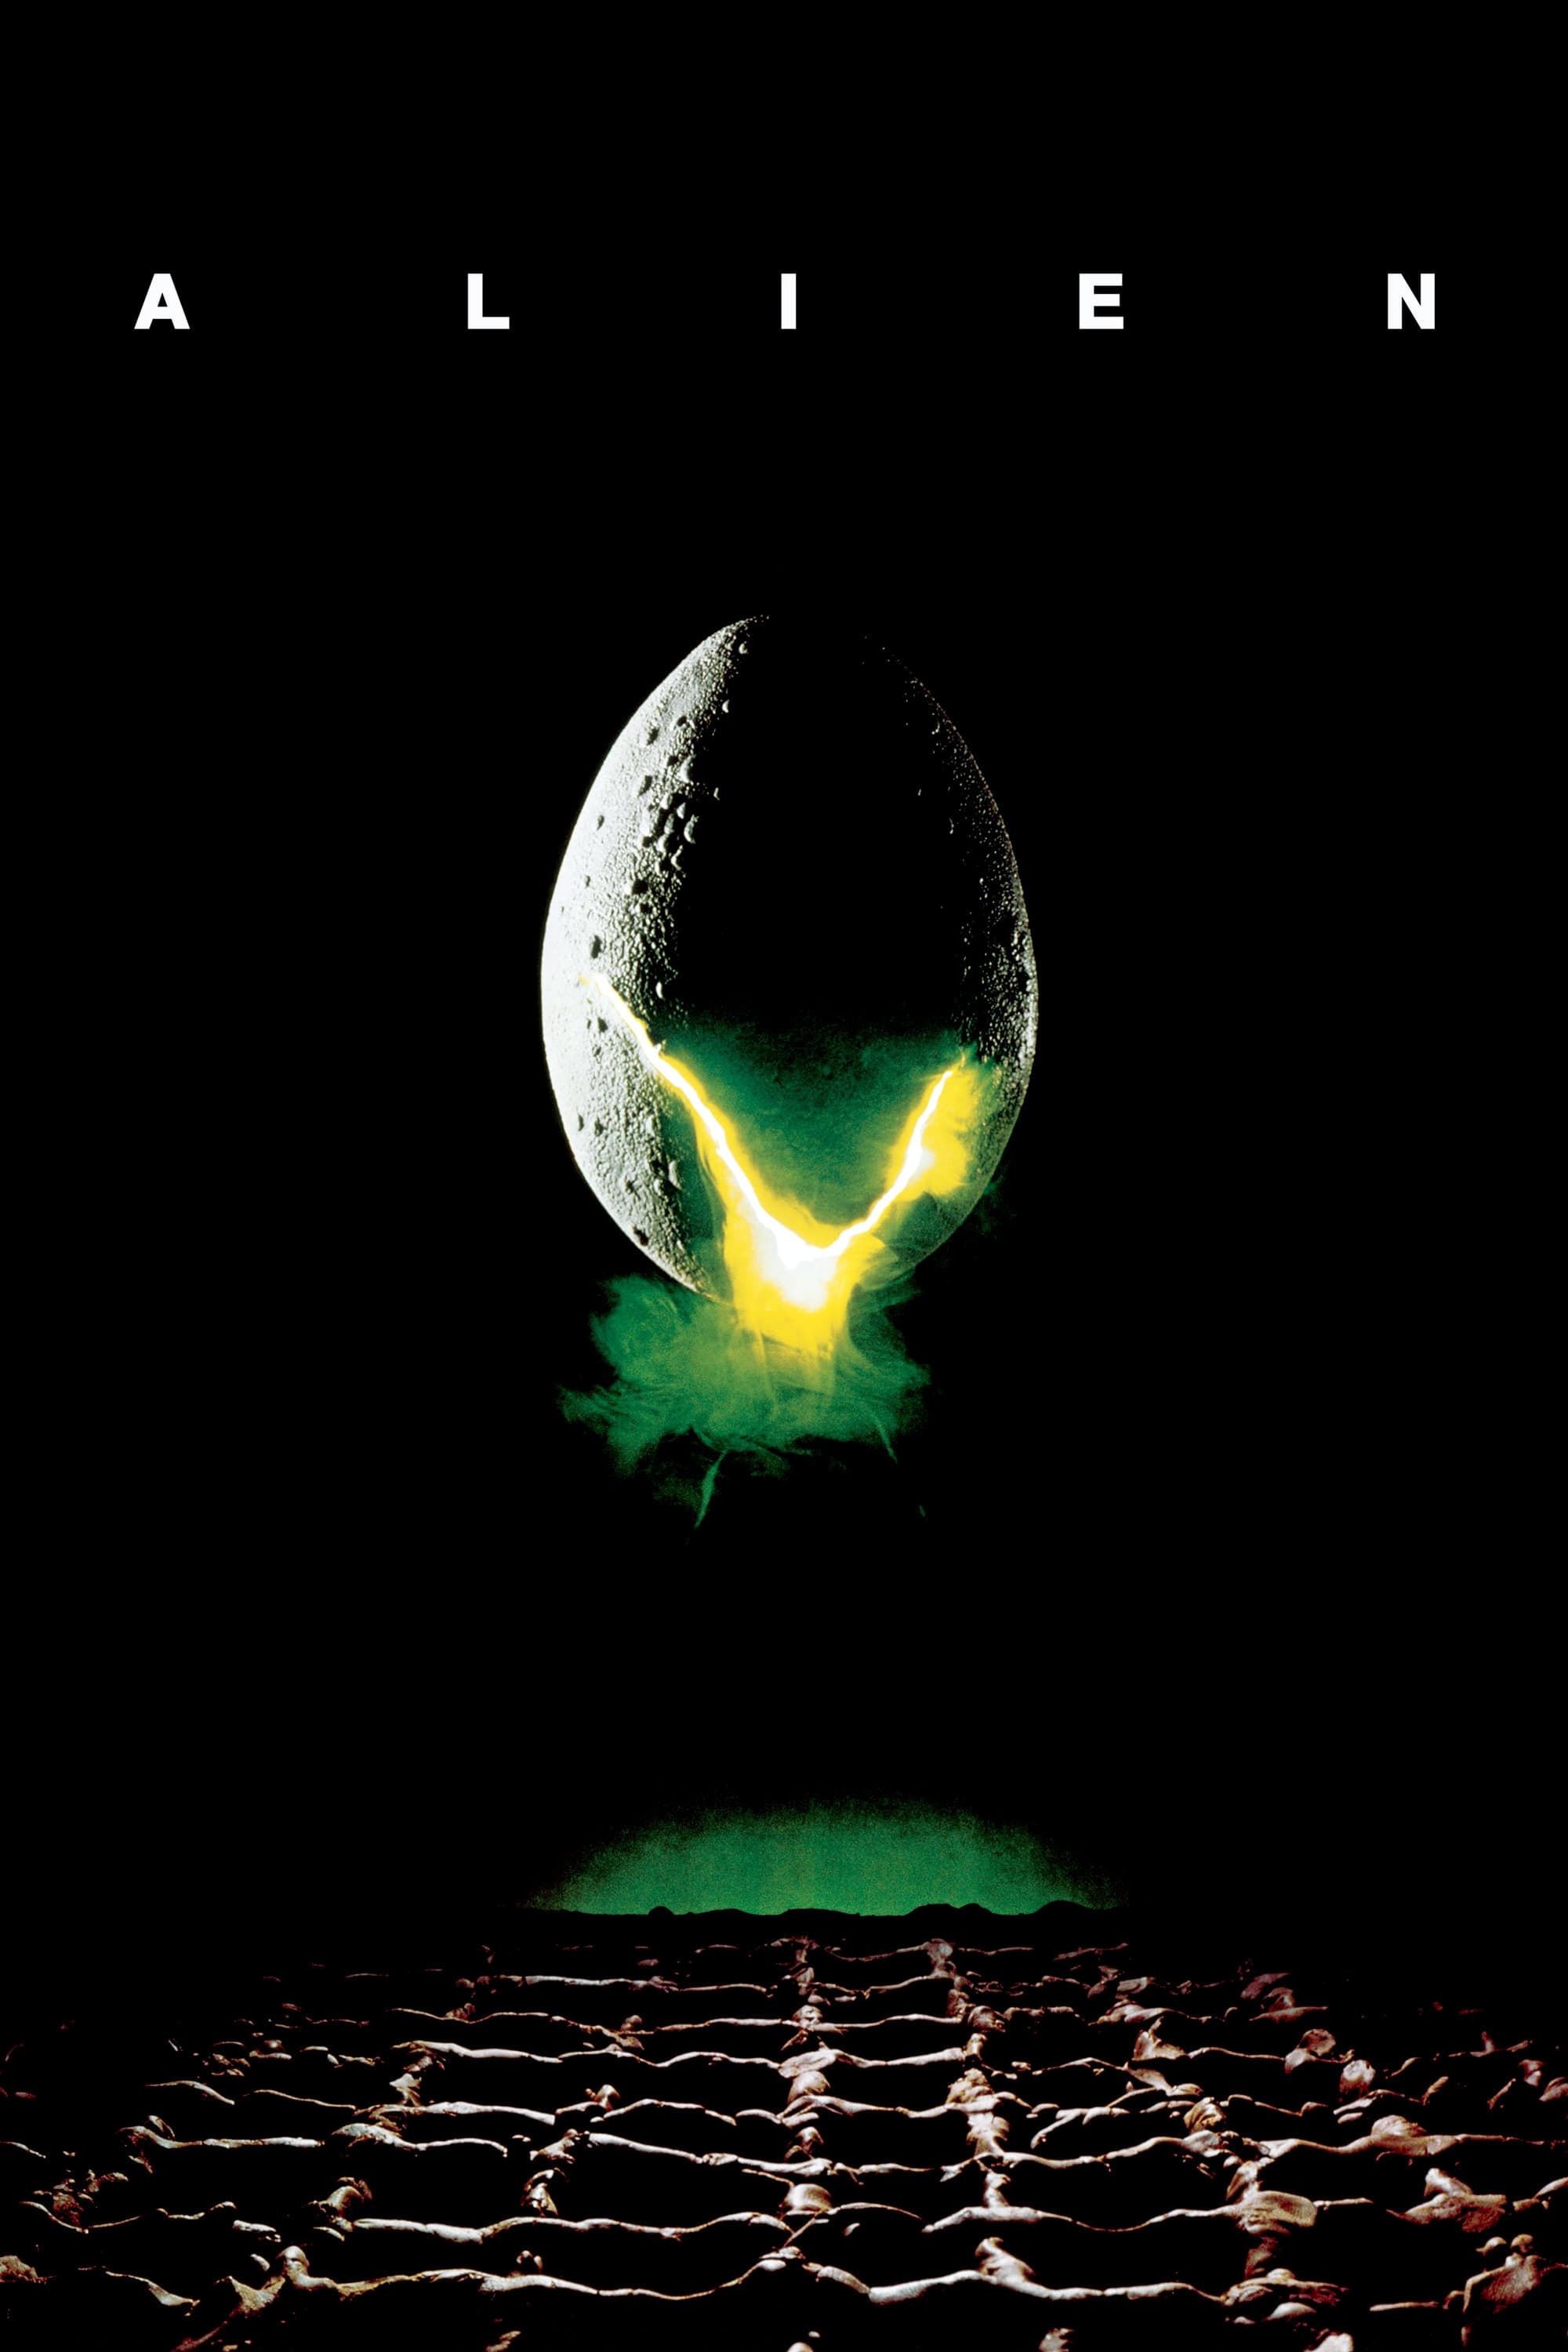 Alien, el octavo pasajero (1979)